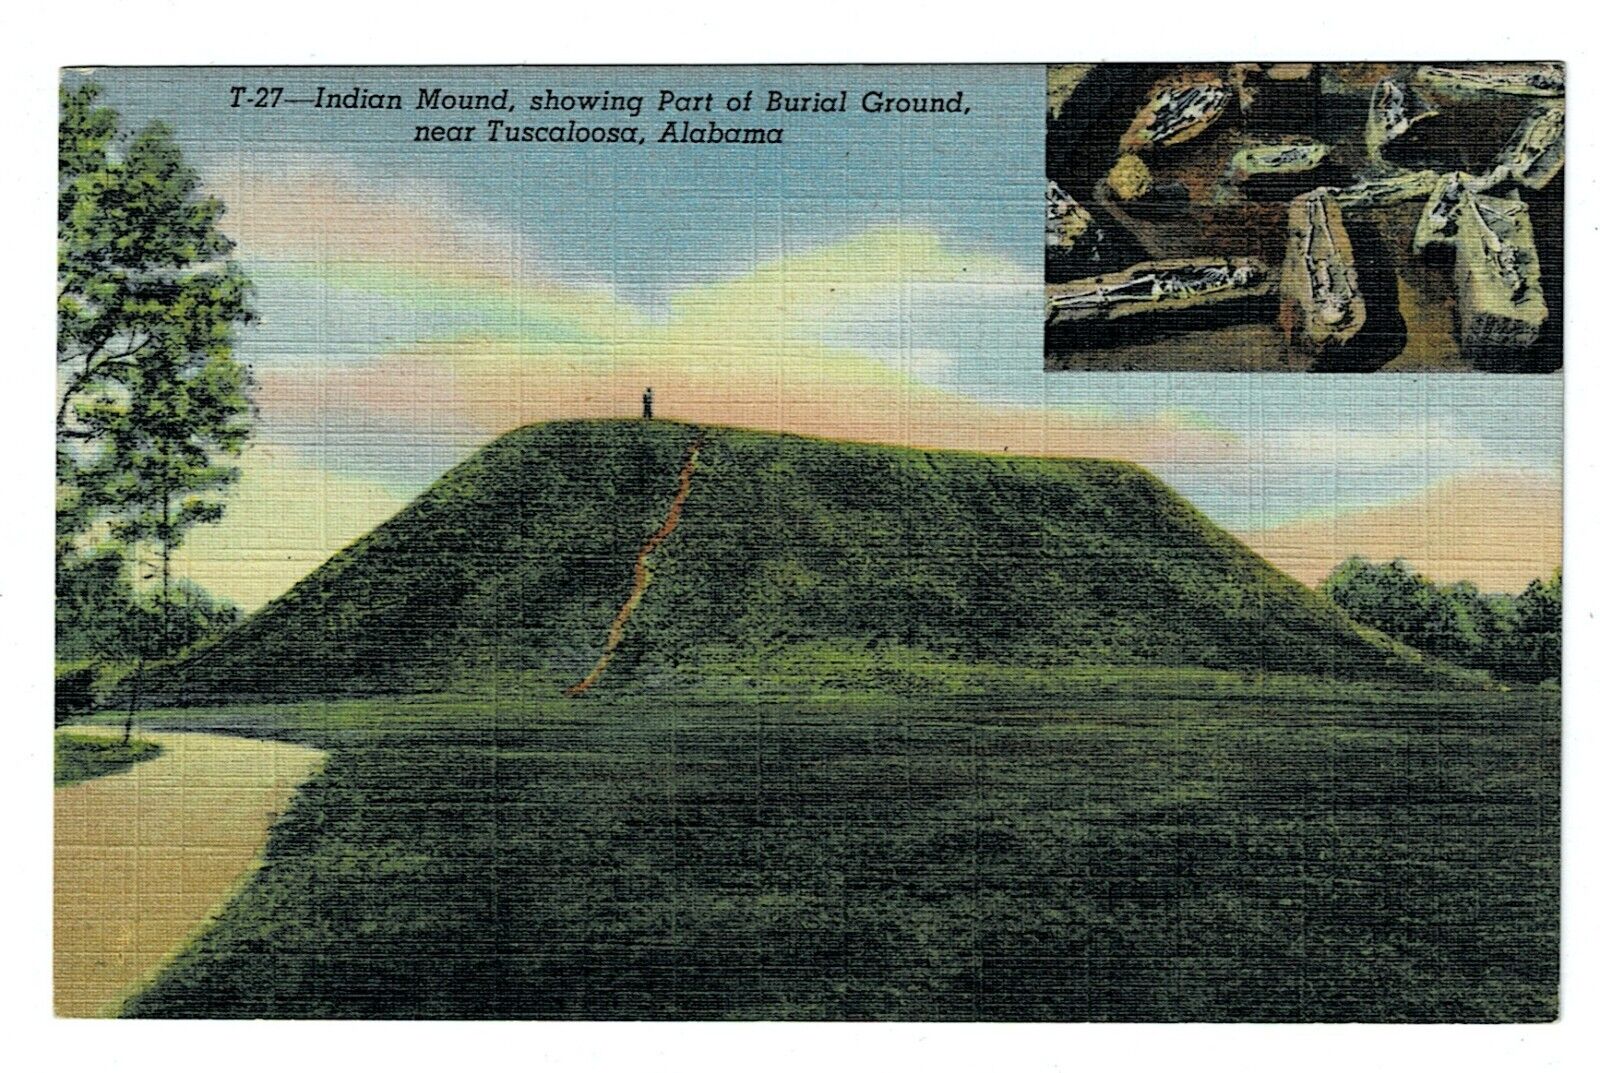 Indian Burial Ground, Maya skeletons, Tuscaloosa, Alabama. Vintage Postcard